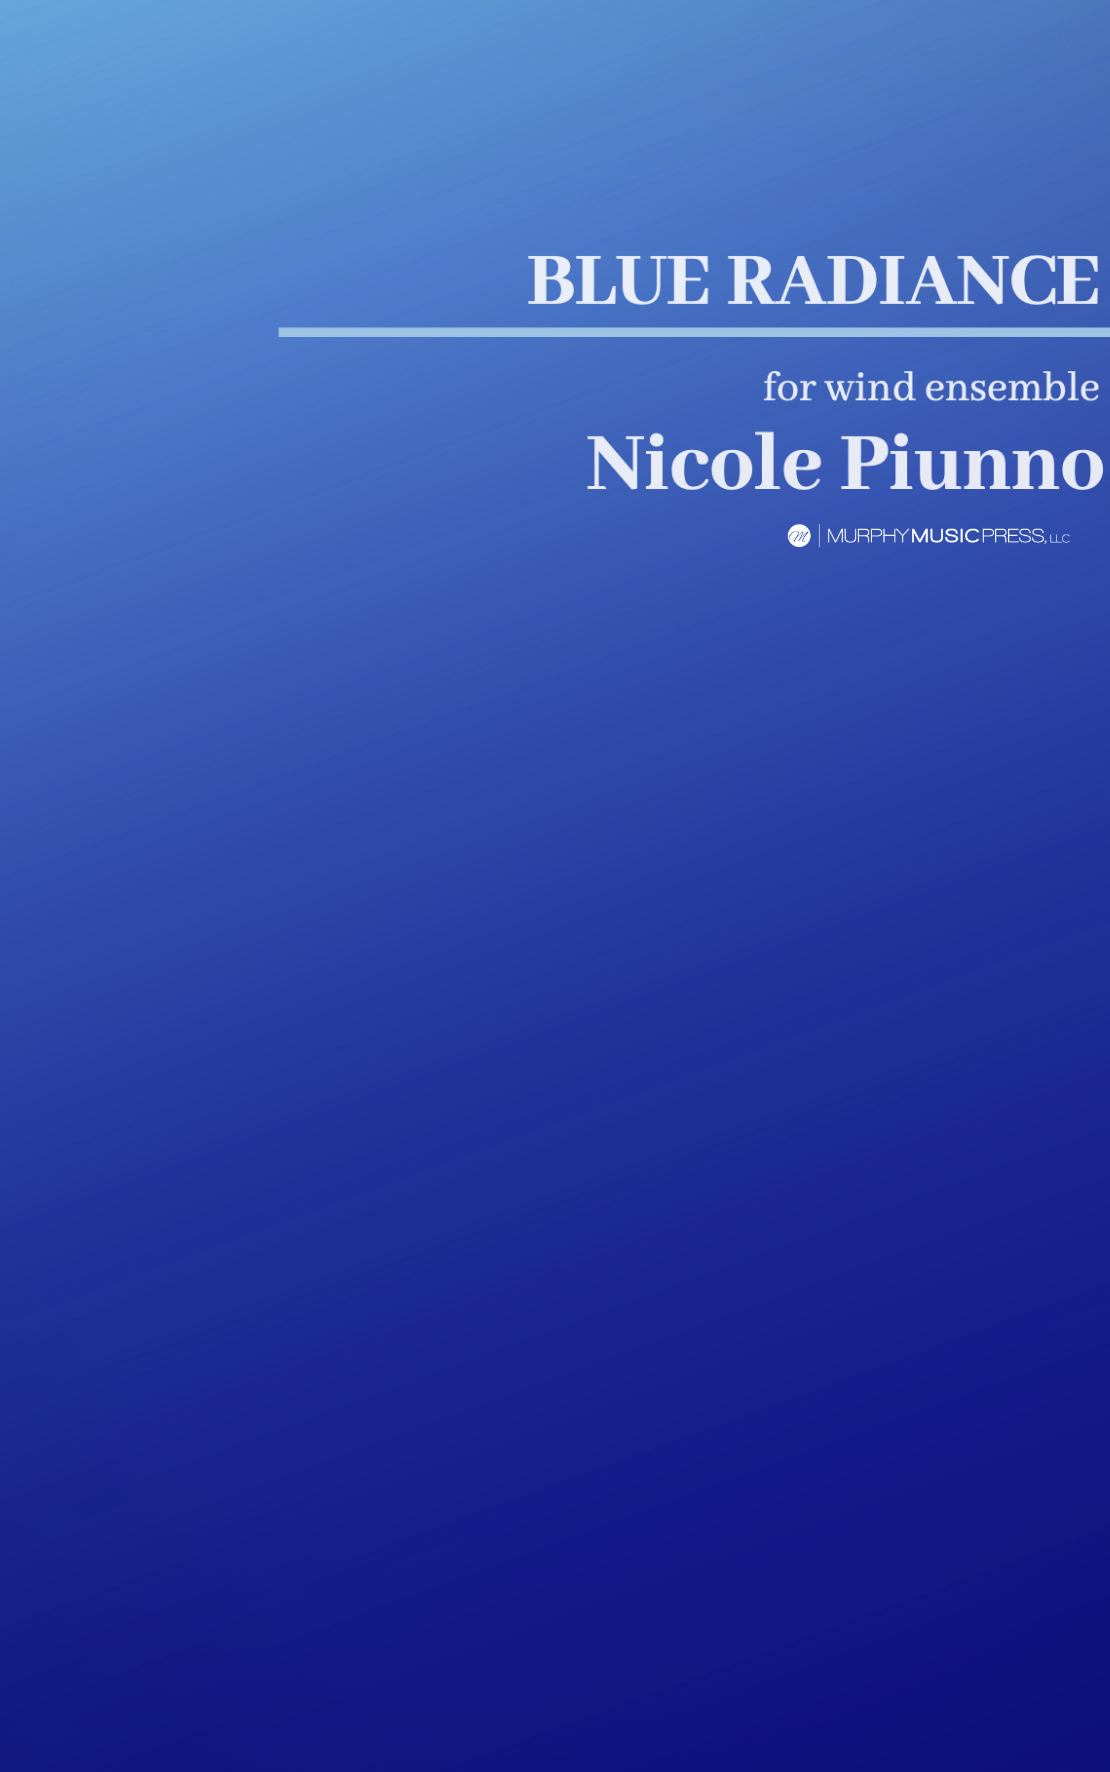 Blue Radiance by Nicole Piunno